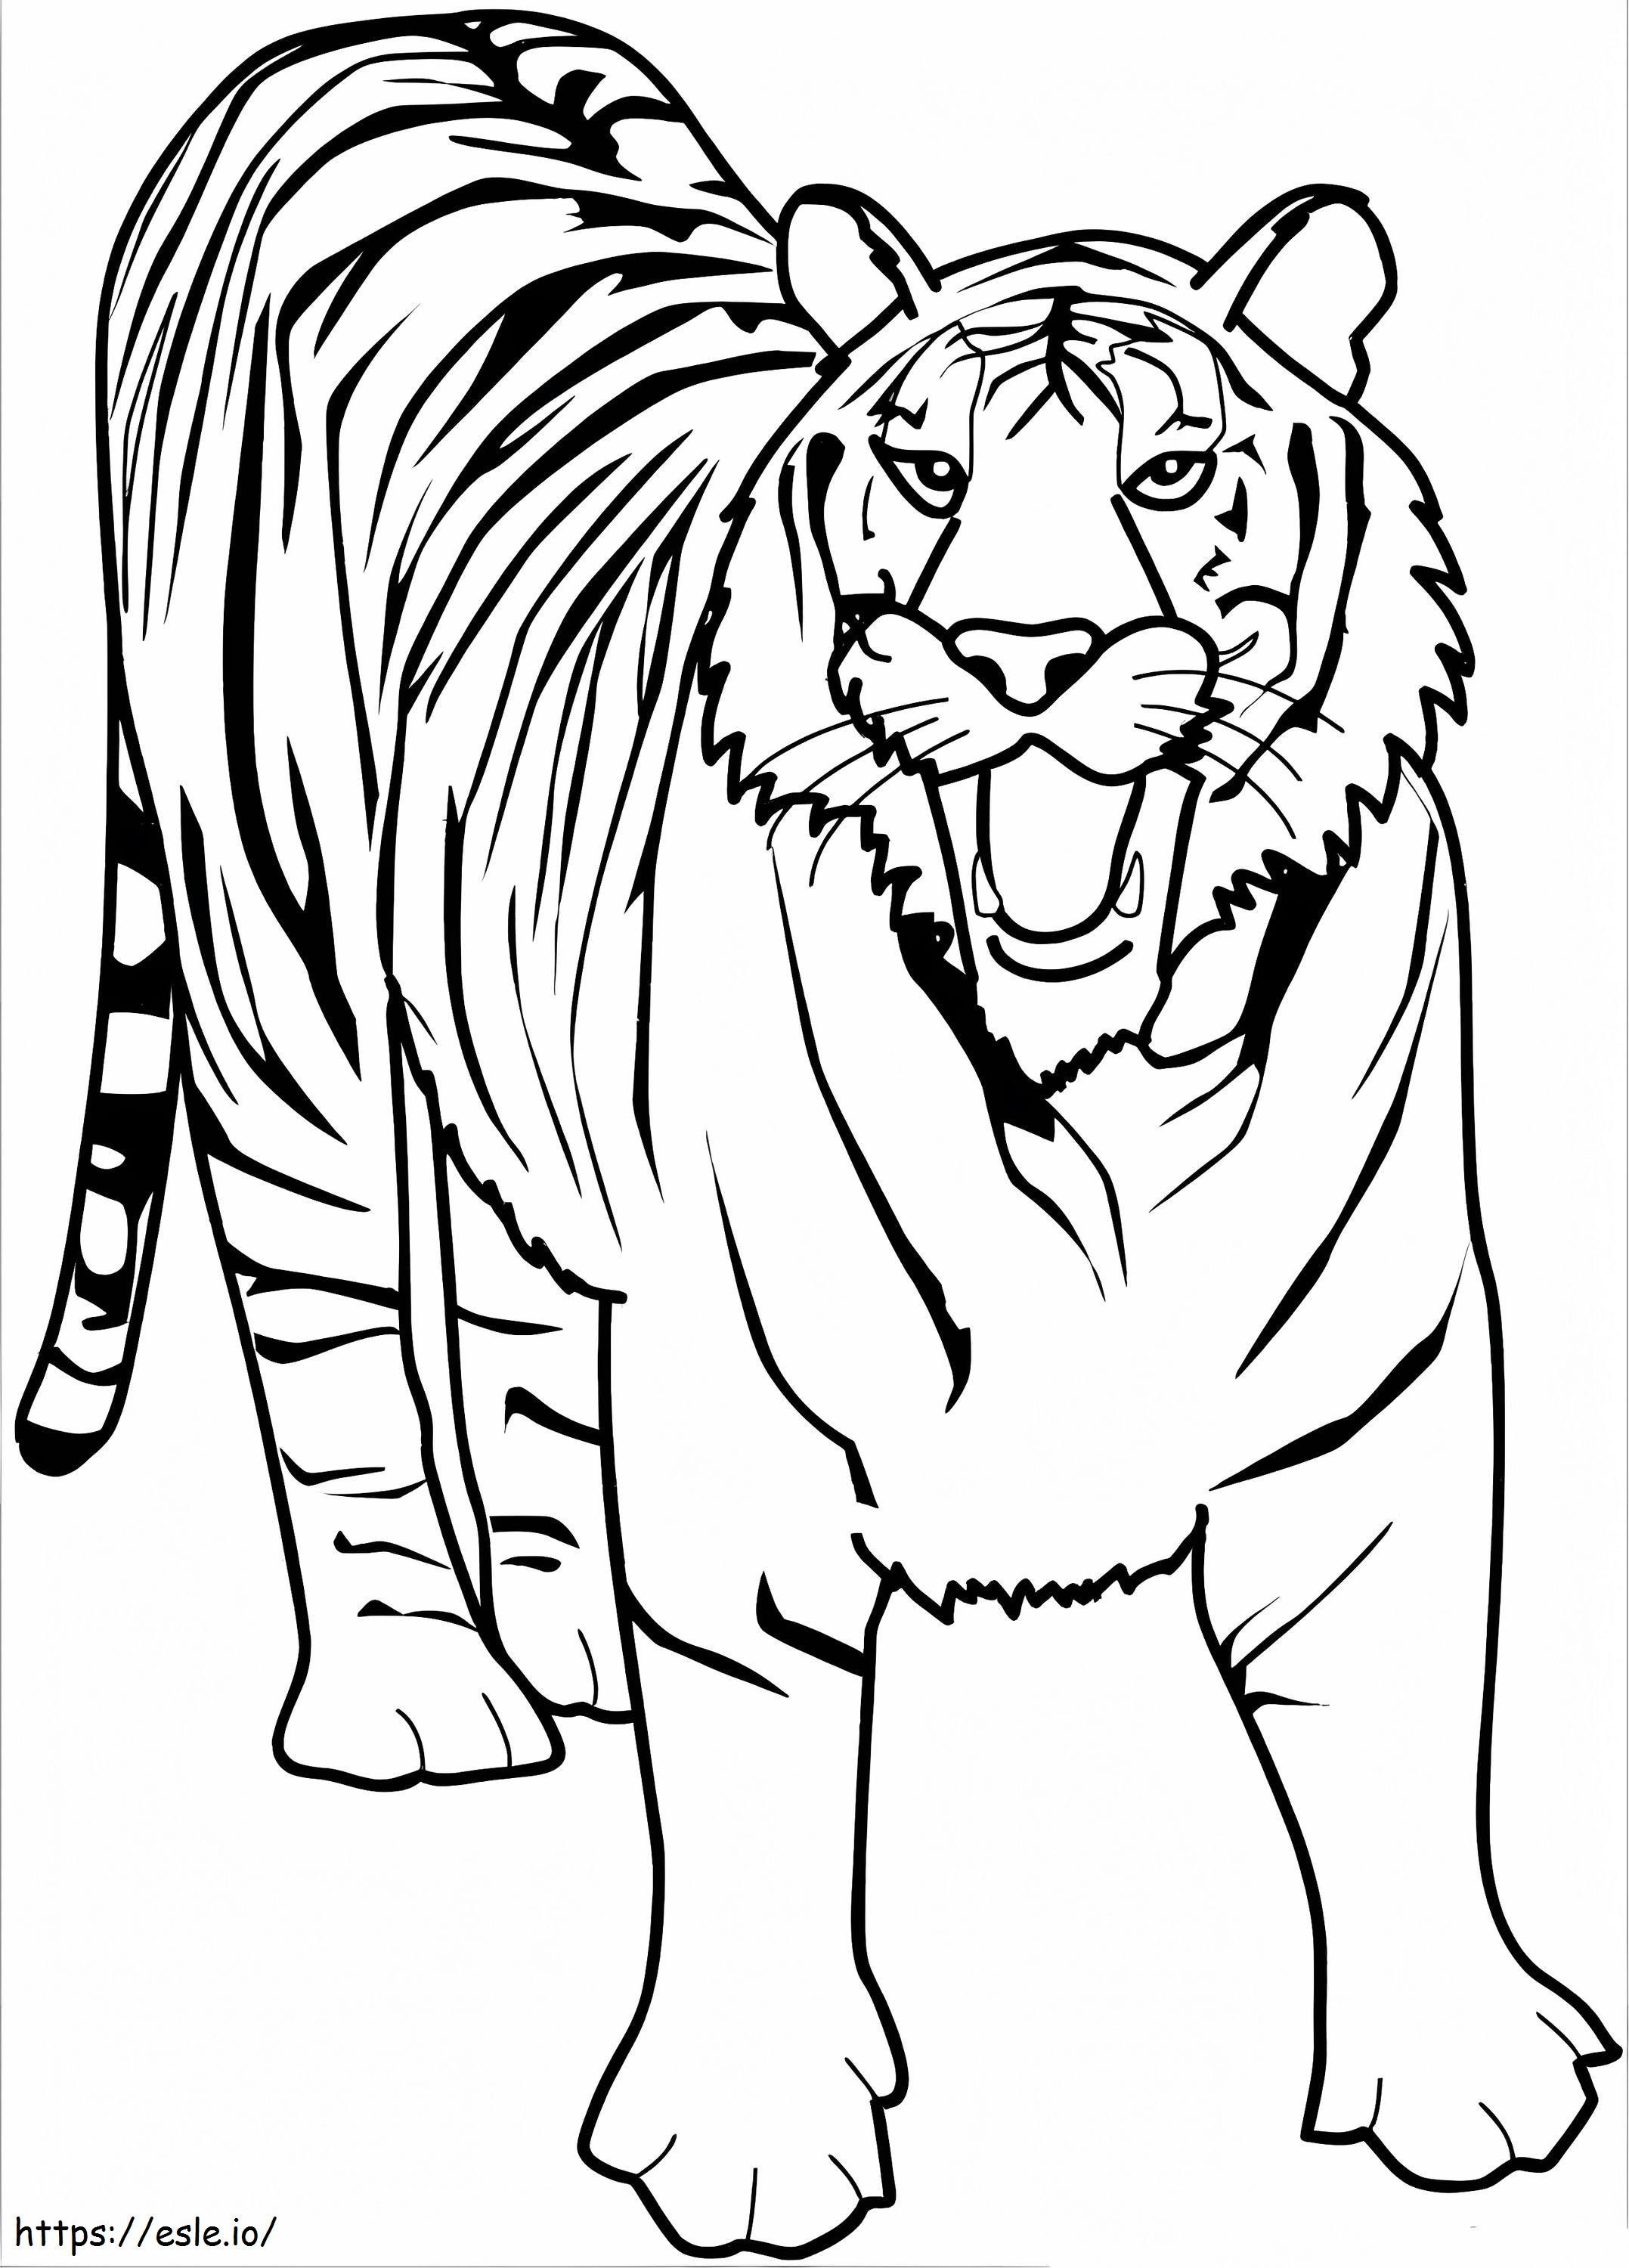 Tigre Imprimible para colorear